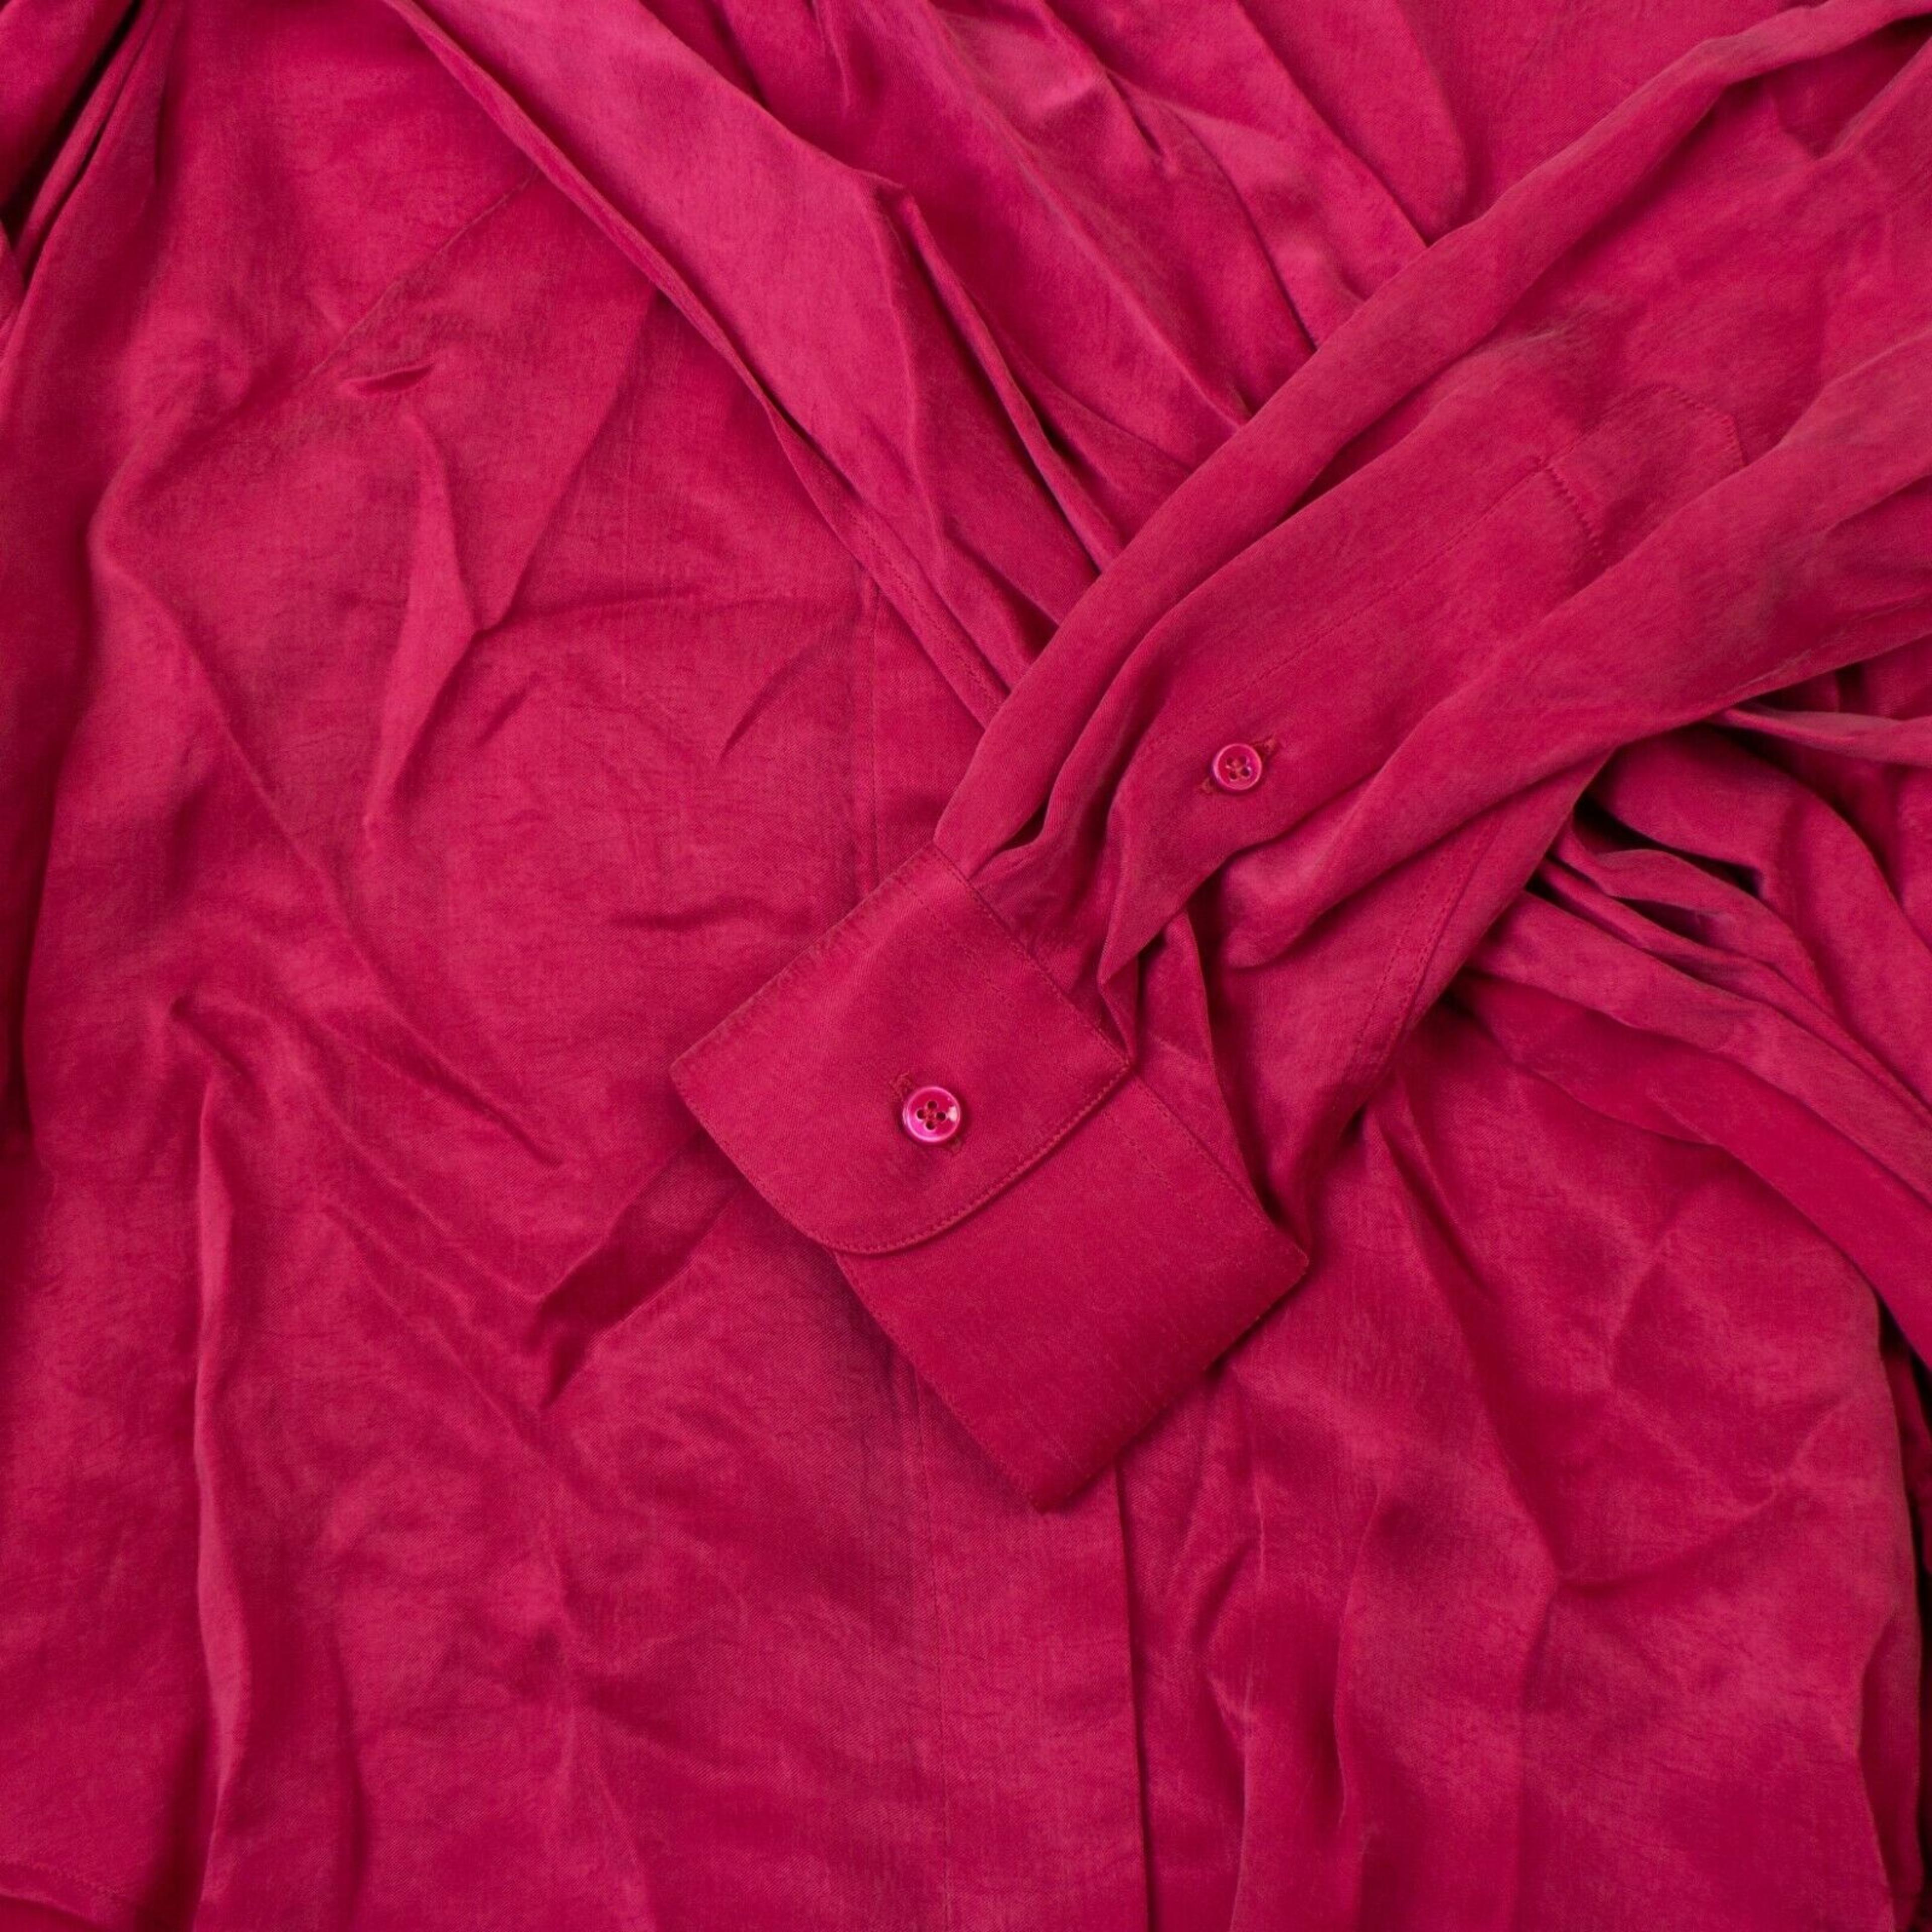 Alternate View 4 of Pink Wrap Shirt